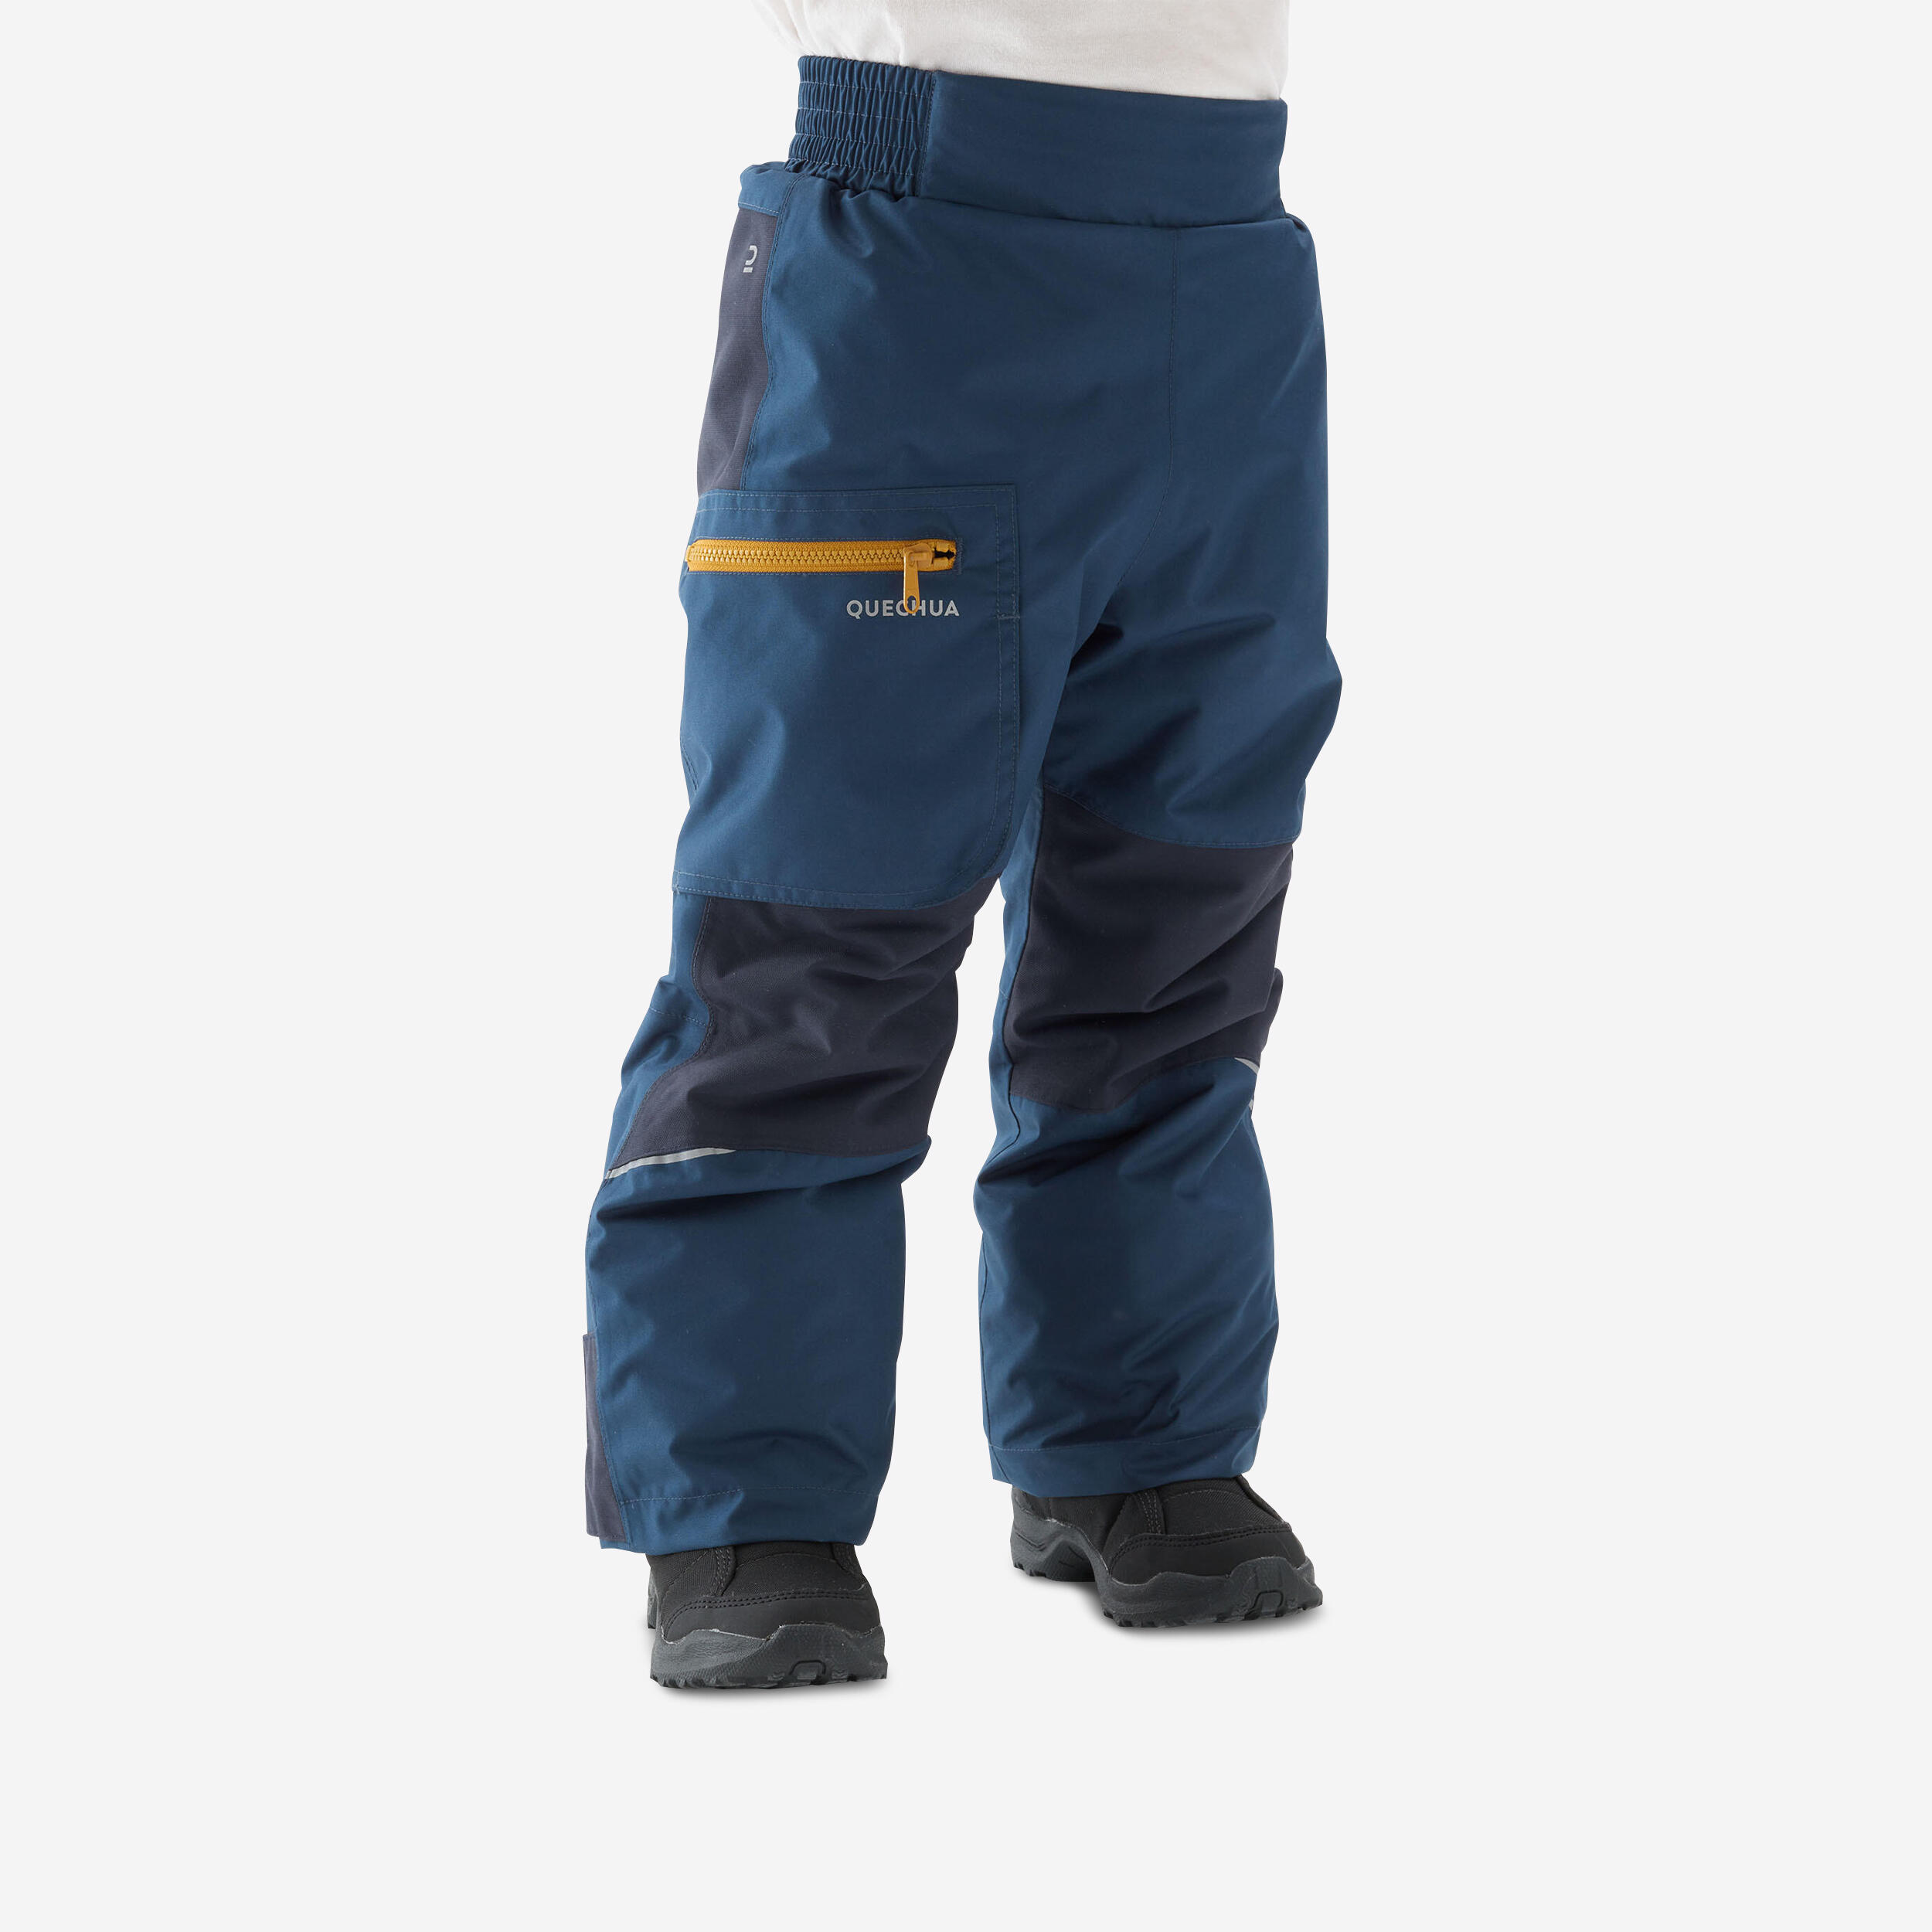 Kids’ Warm Waterproof Hiking Trousers - SH500 MOUNTAIN - Ages 2-6 1/12